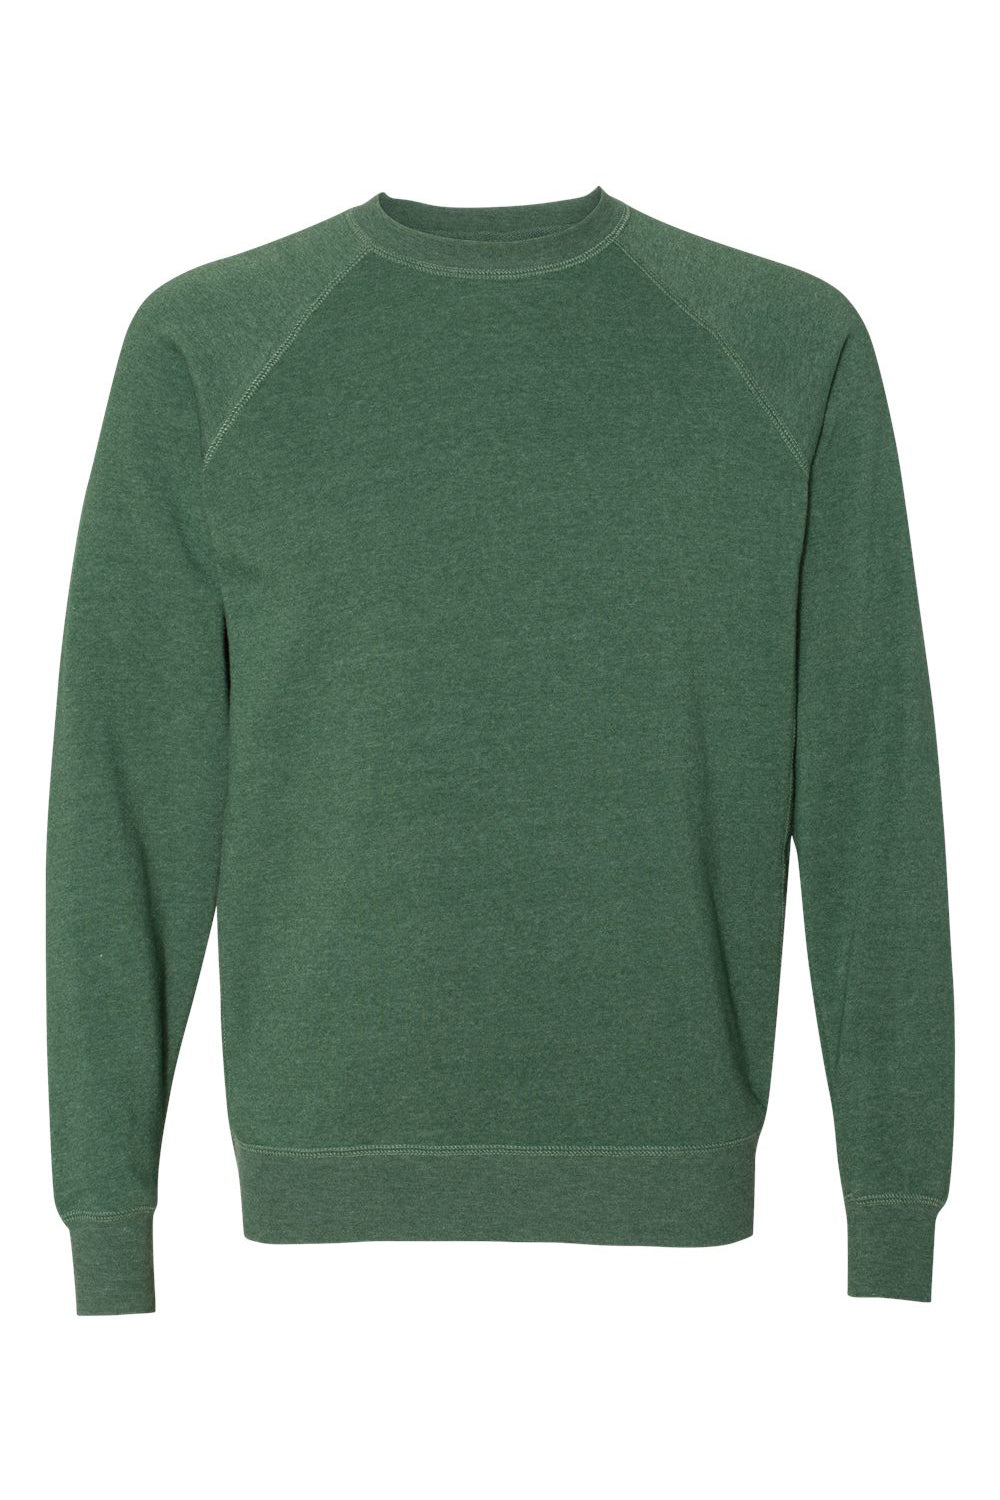 Independent Trading Co. PRM30SBC Mens Special Blend Crewneck Raglan Sweatshirt Moss Green Flat Front